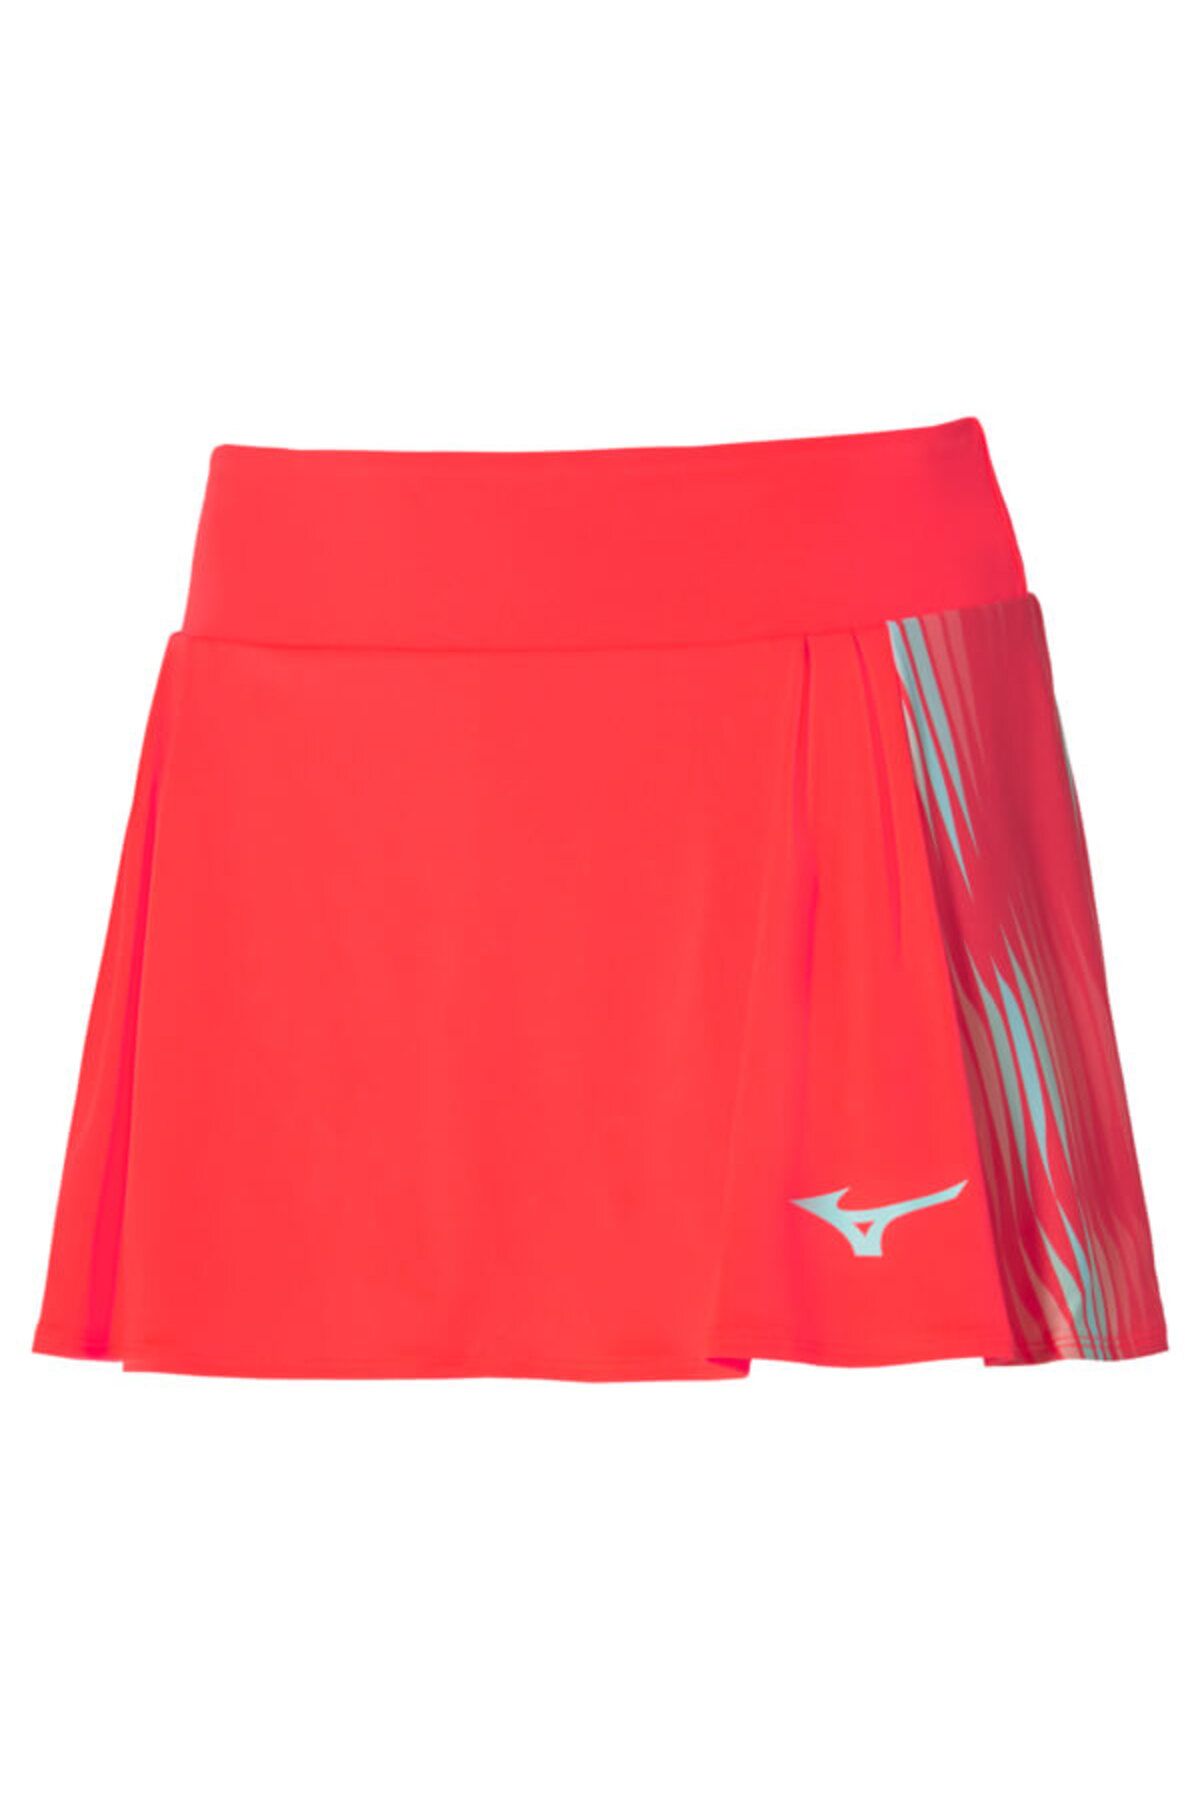 Mizuno Printed Flying Skirt Kadın Tenis Eteği Turuncu